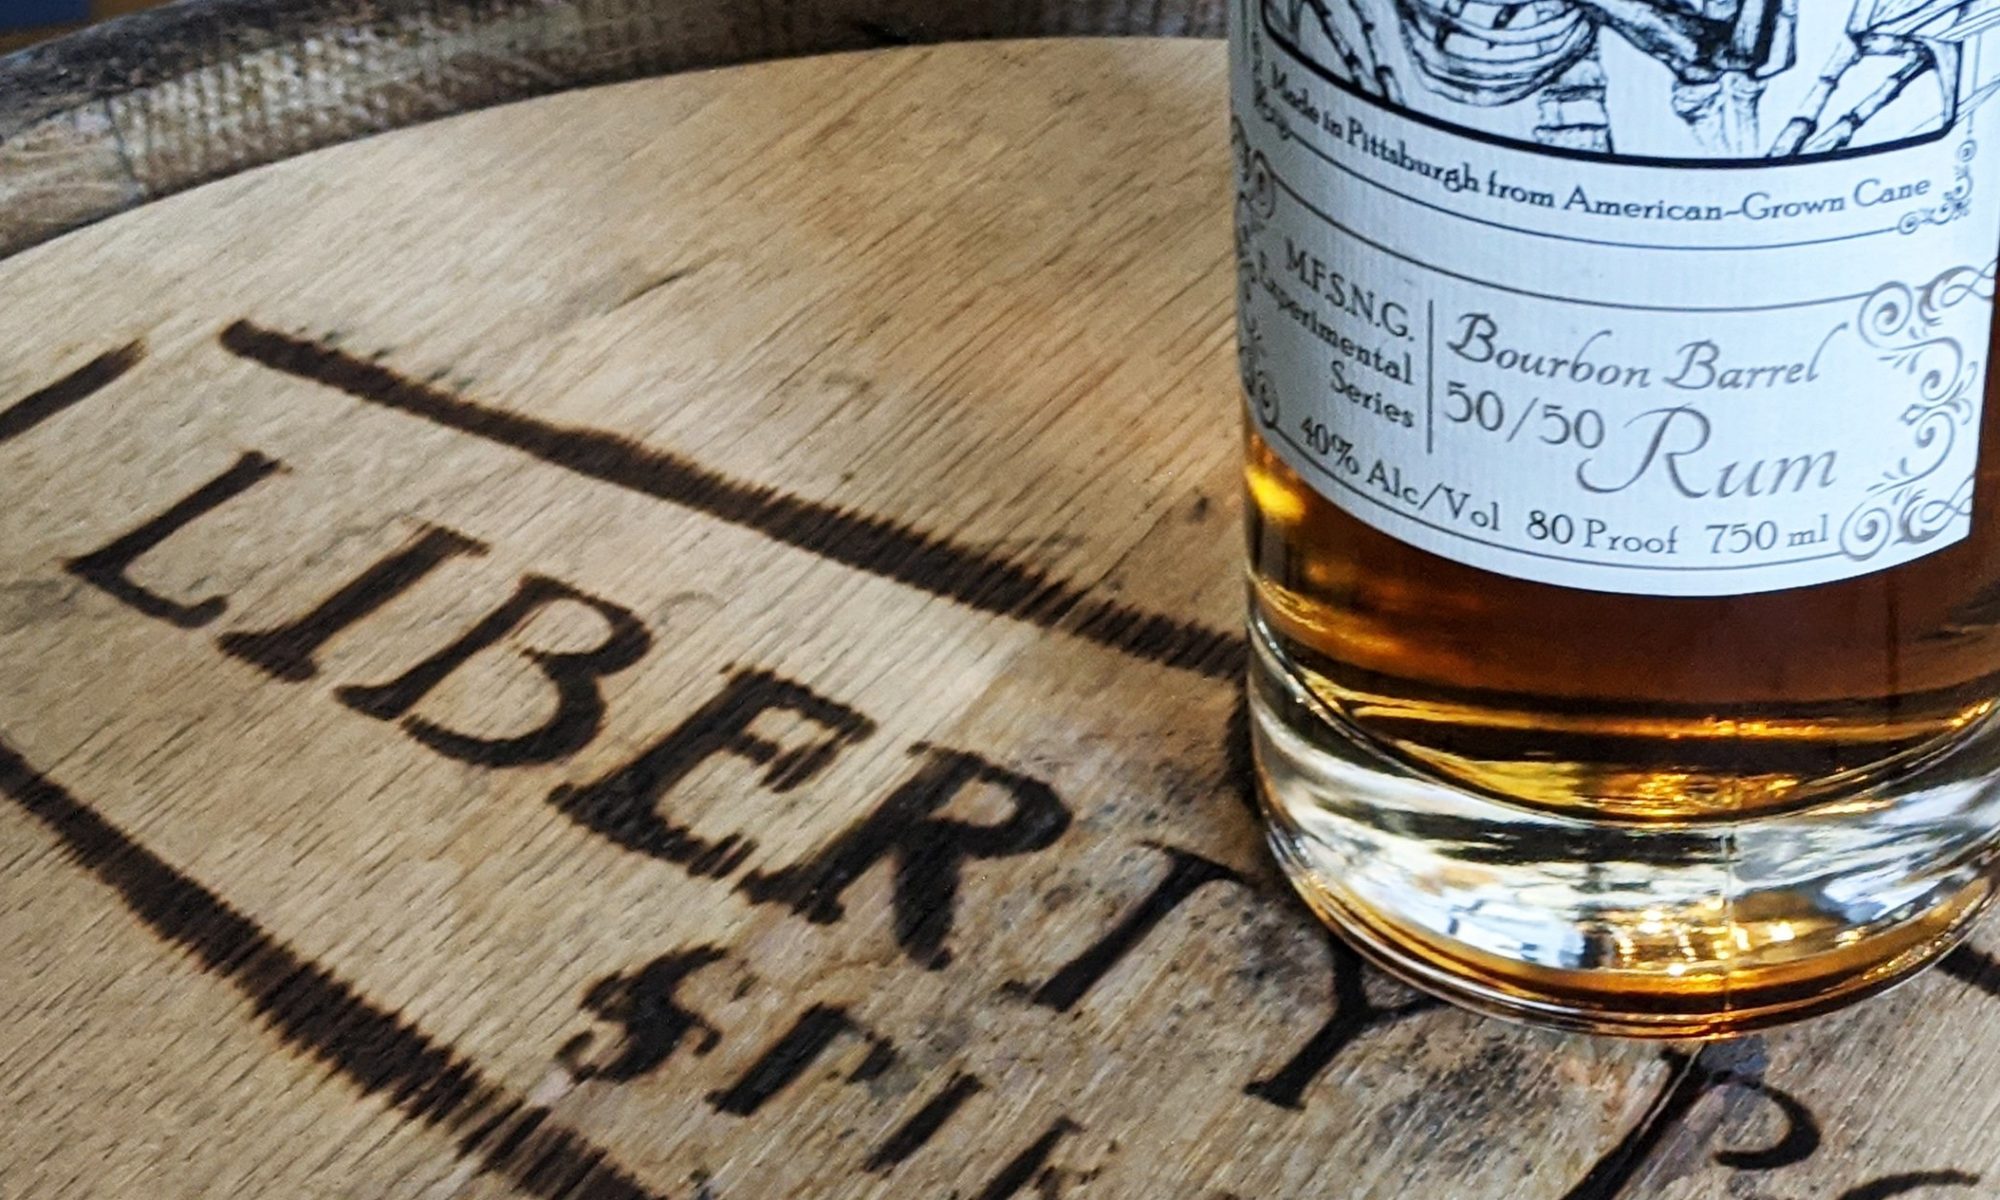 Maggie's Farm 50/50 Rum Finished in Bourbon Barrel